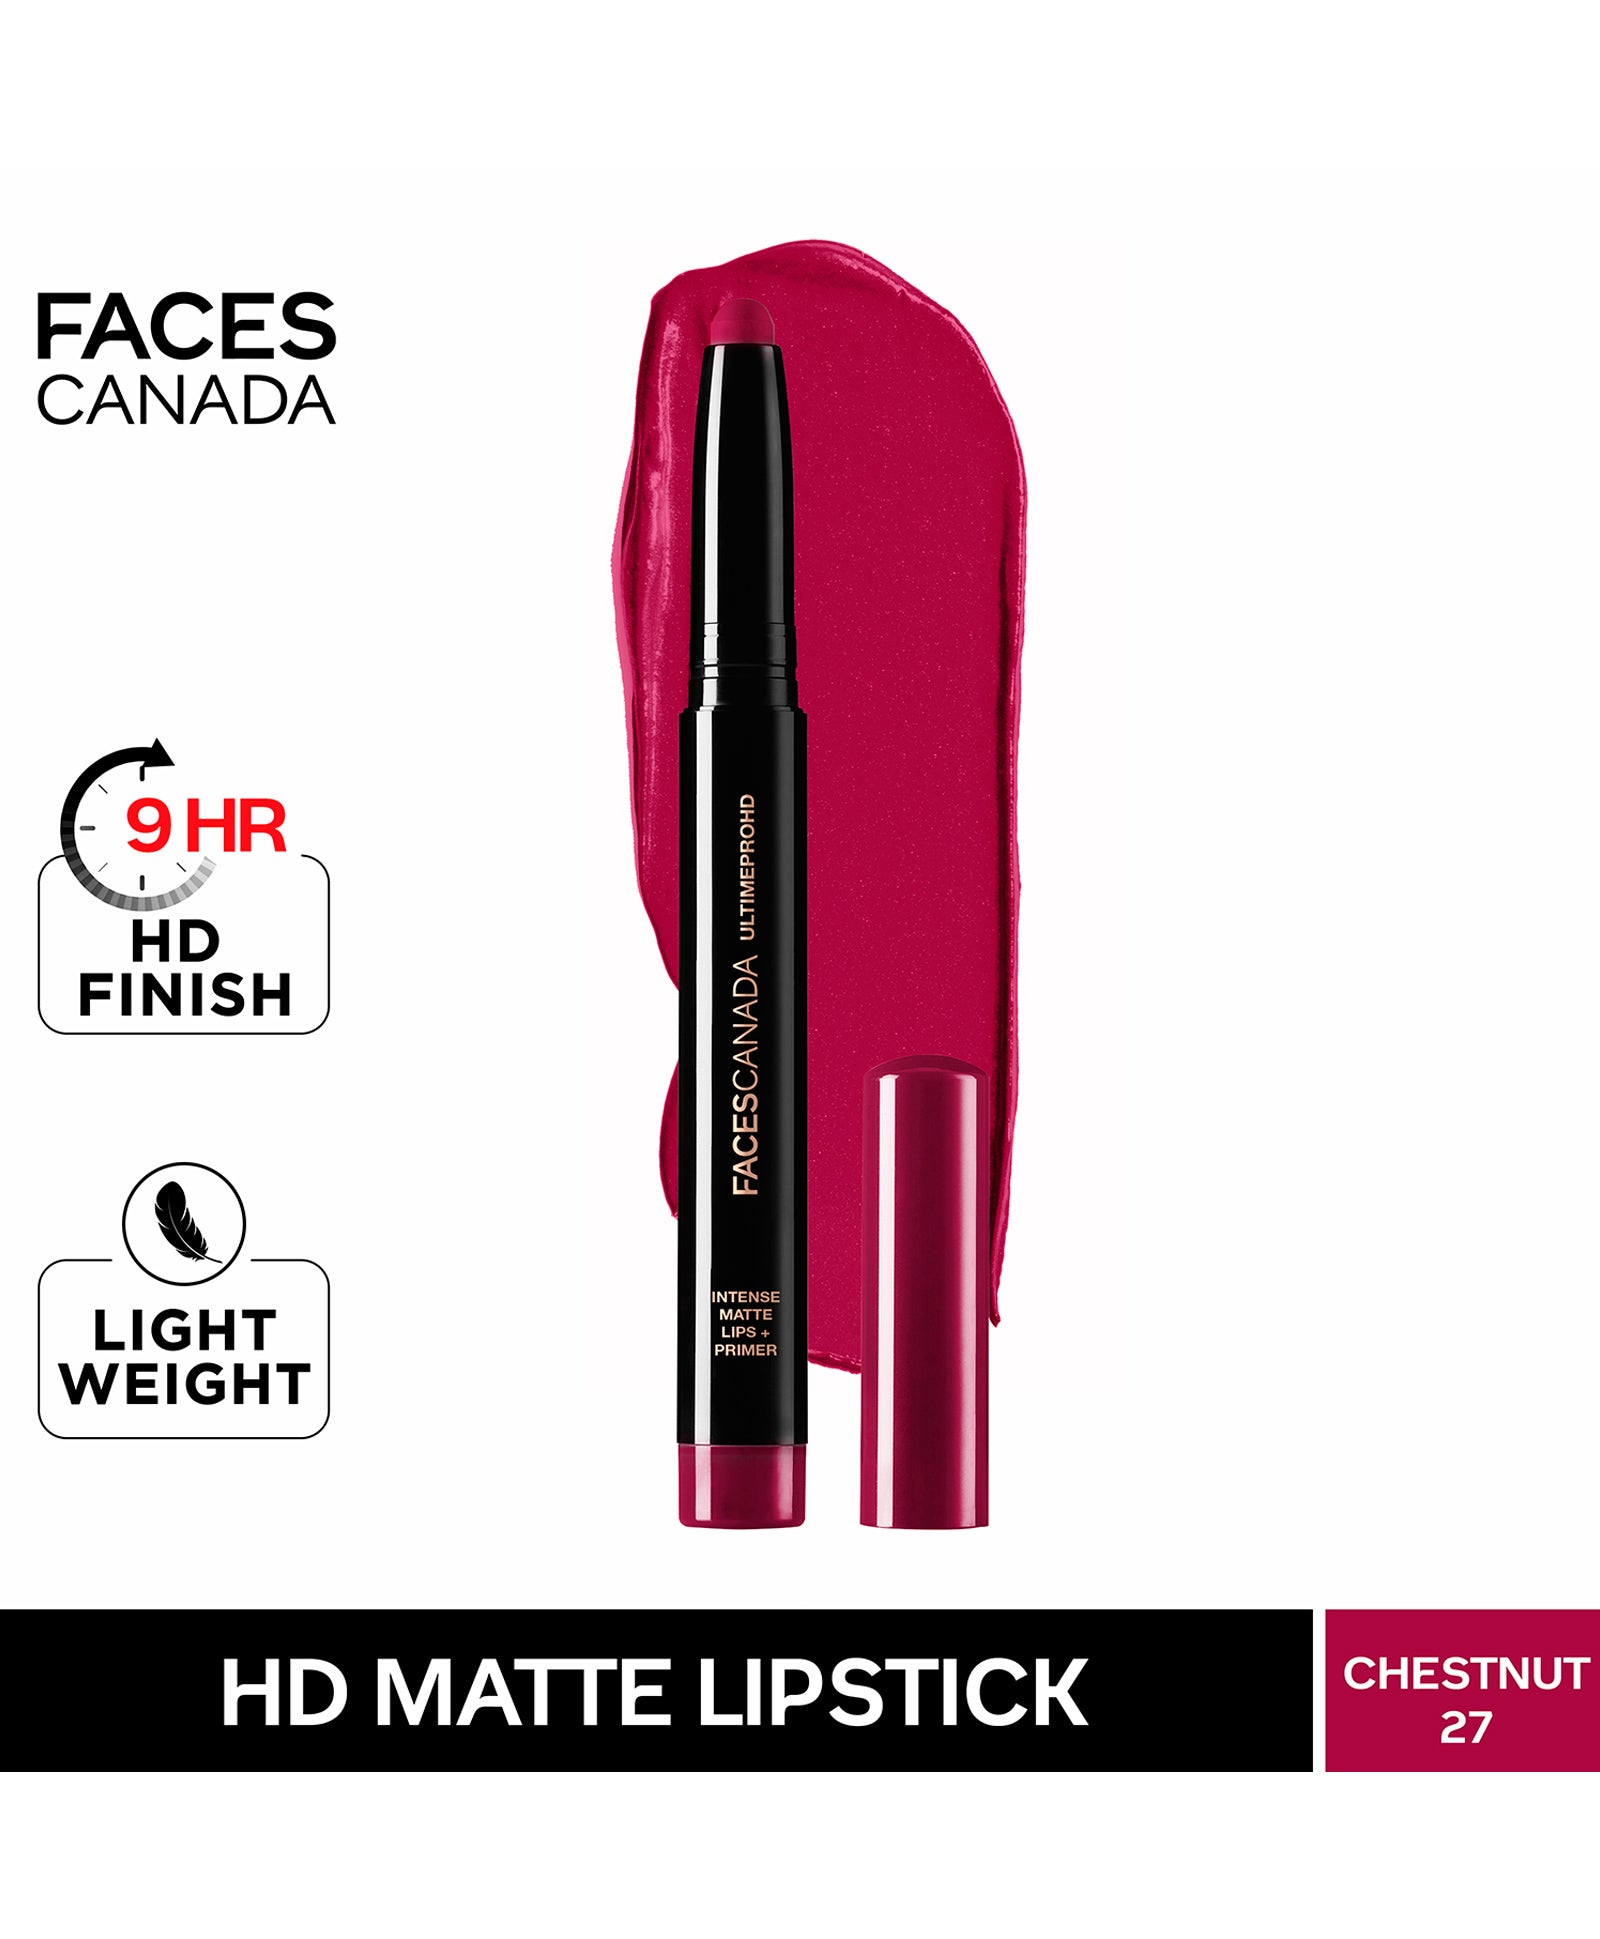 Faces Canada Ultime Pro HD Intense Matte Lips + Primer Chestnut 27 (1.4g) Faces Canada